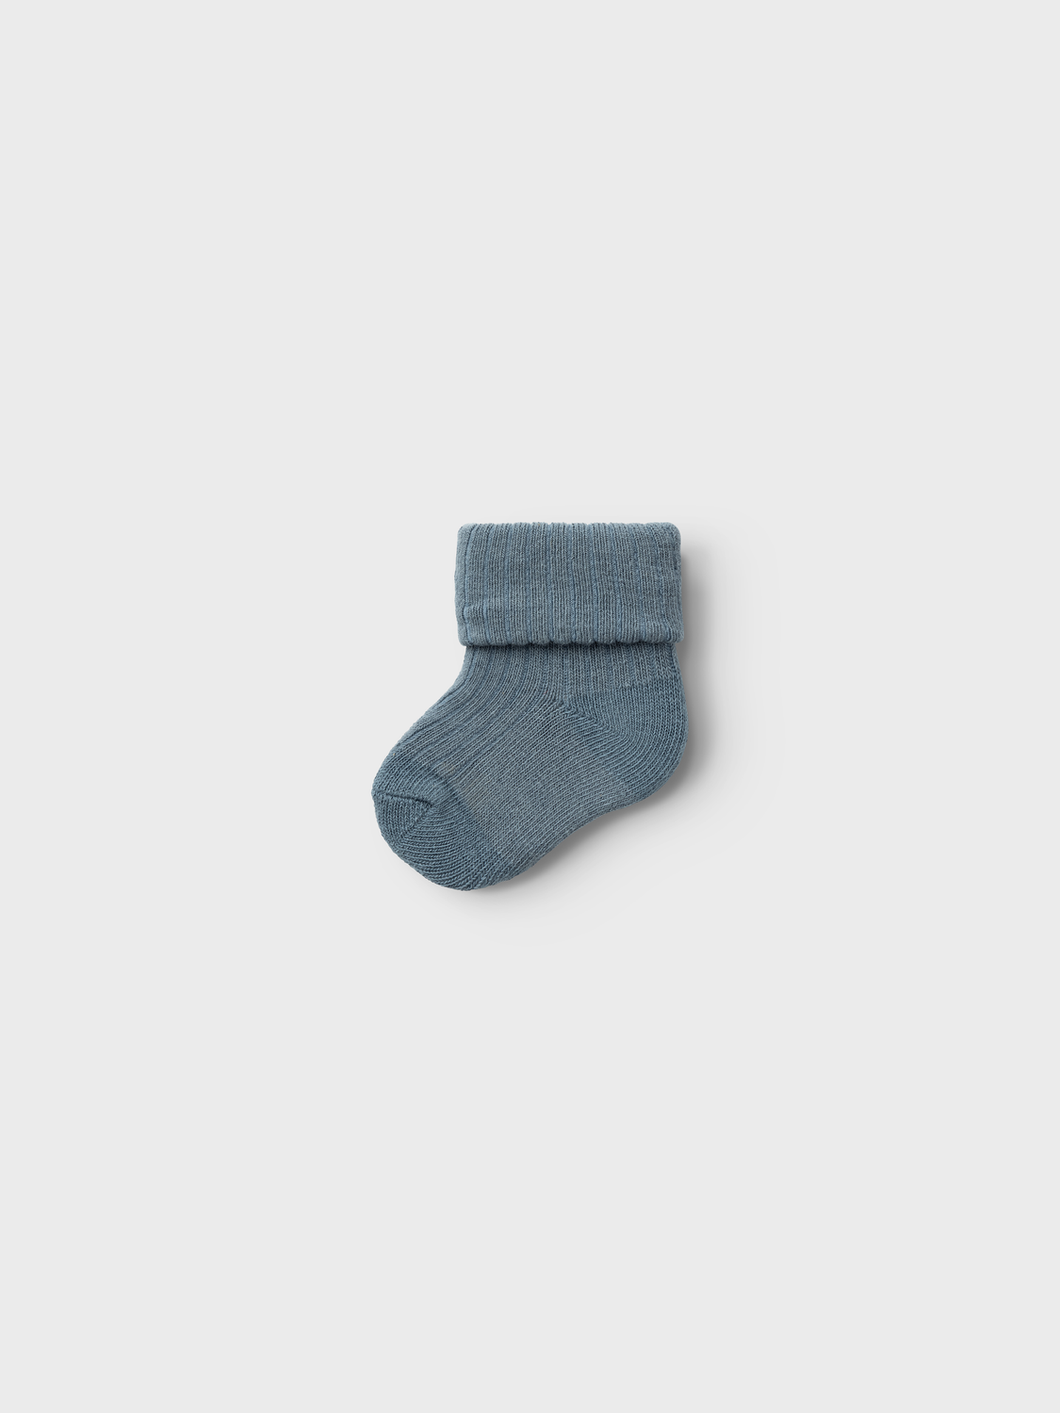 NBMNOBBU Socks - Provincial Blue